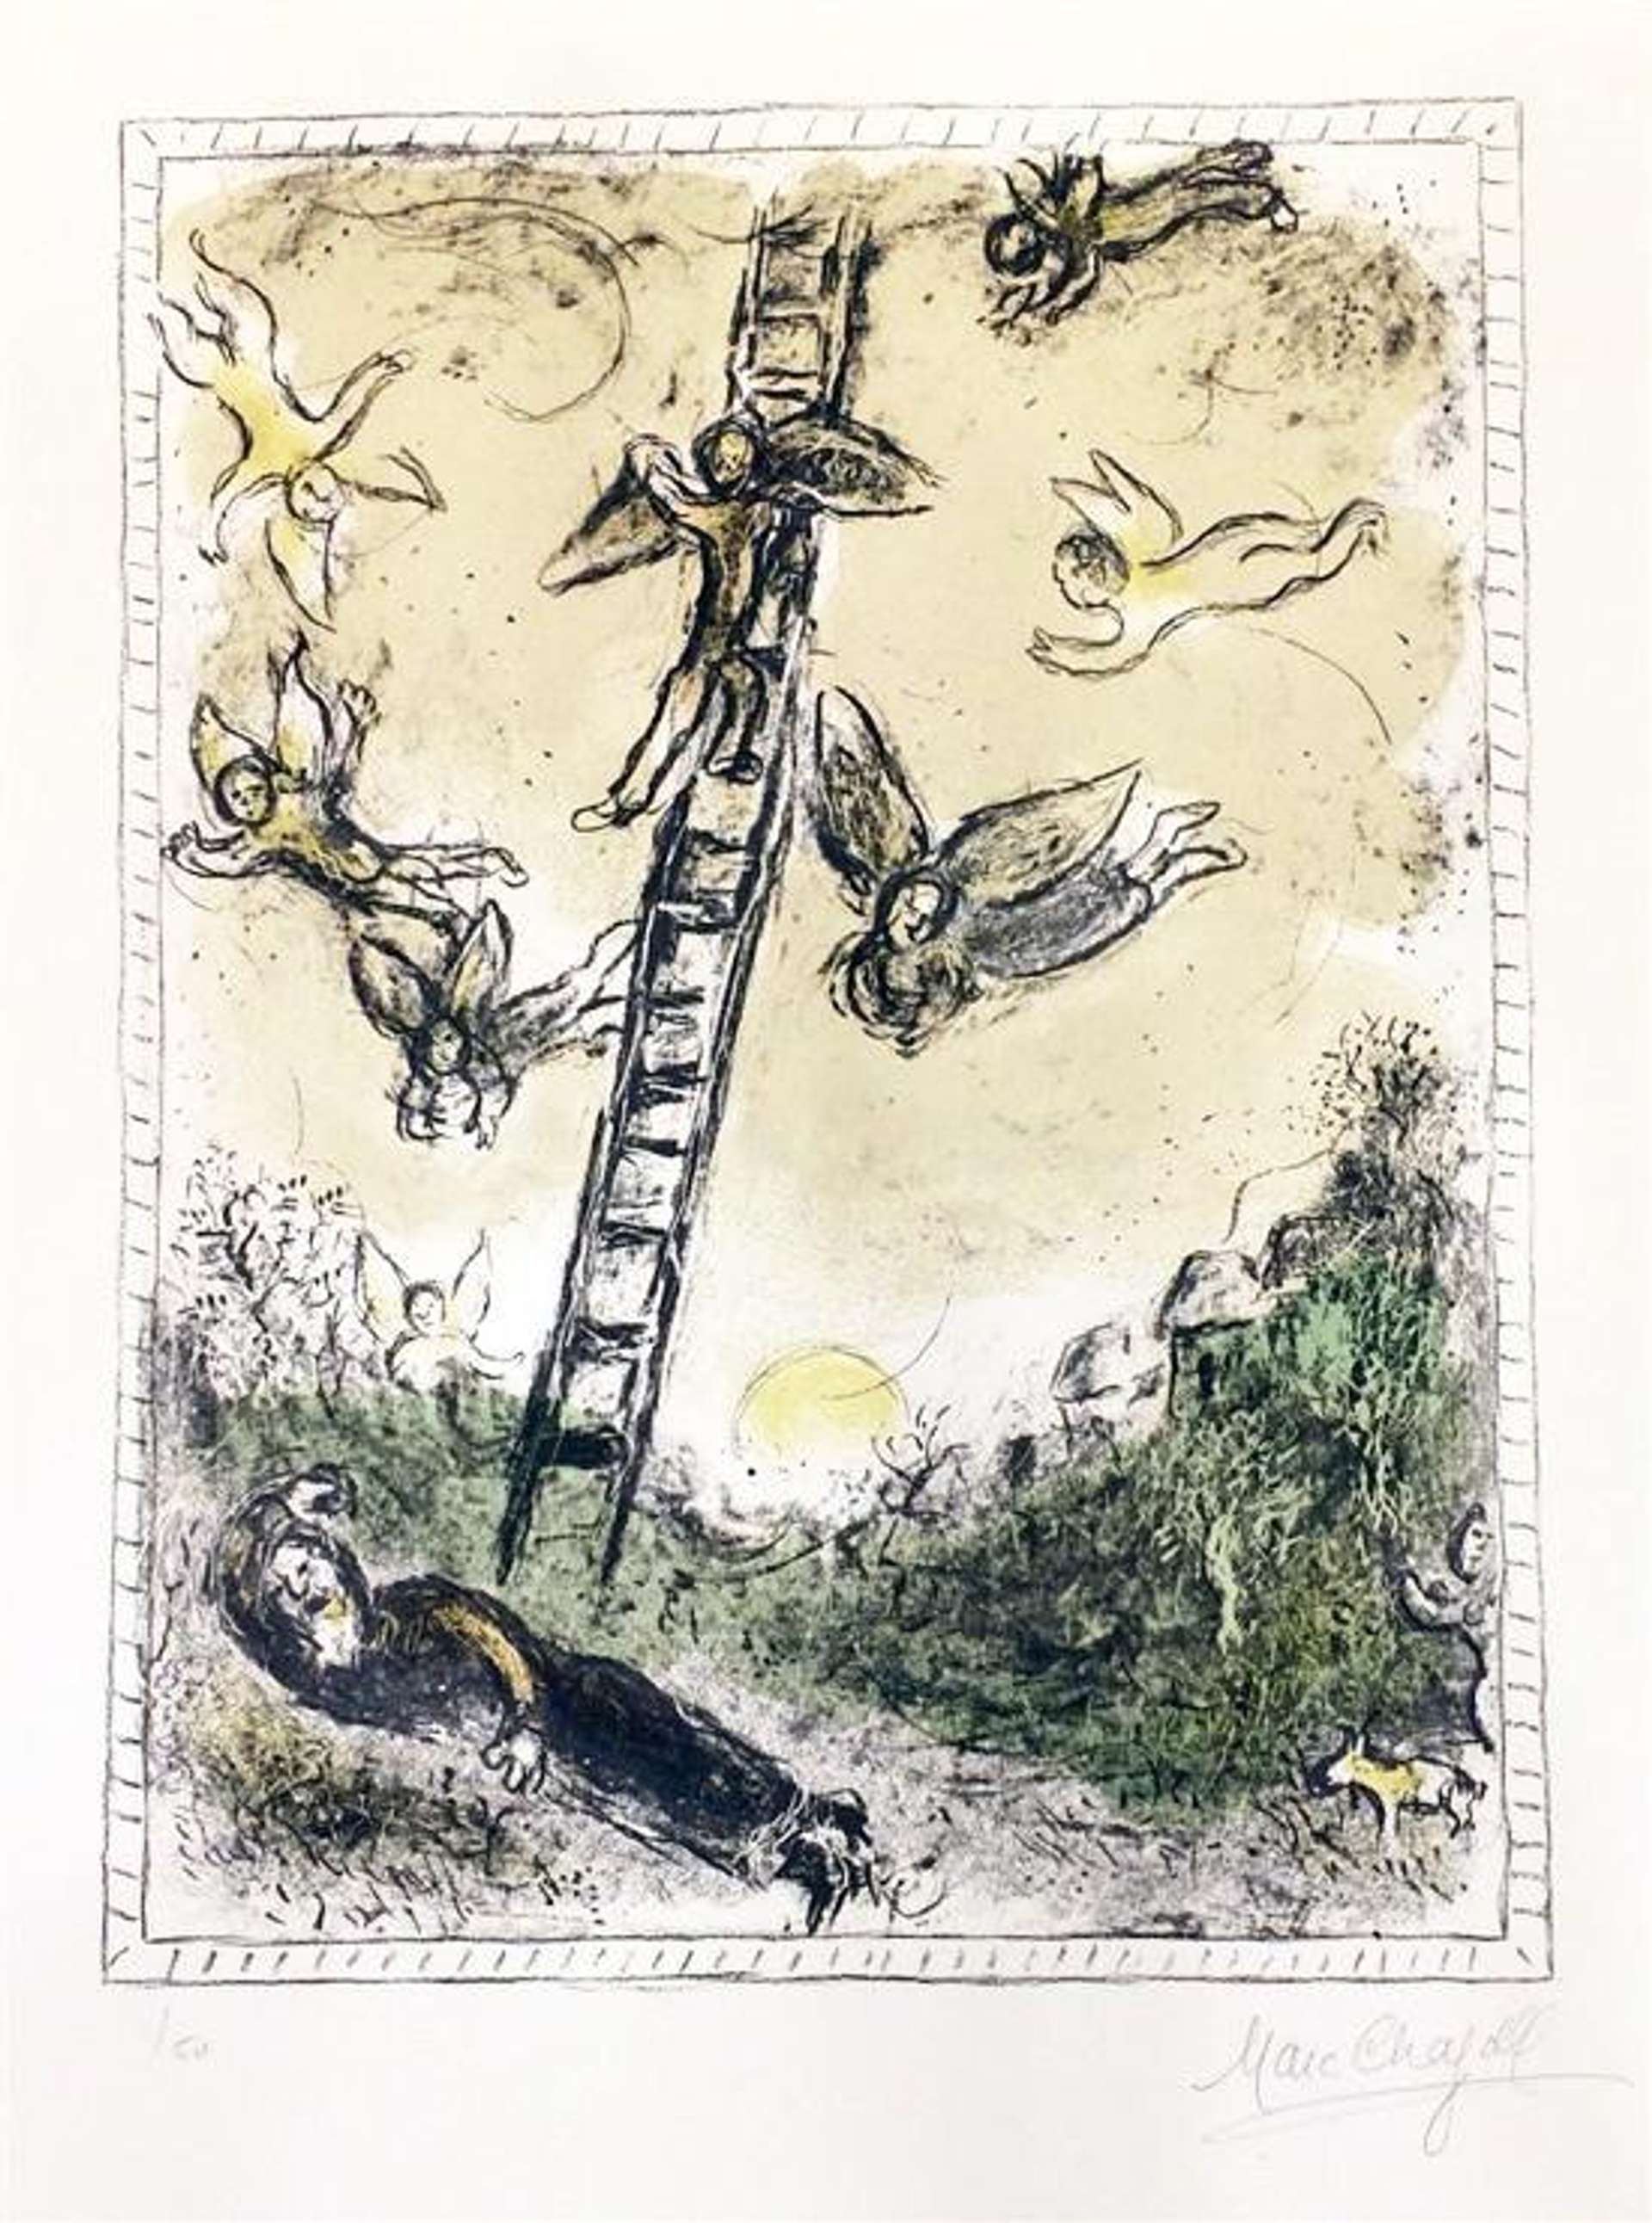 Marc Chagall: Jacob’s Dream - Signed Print